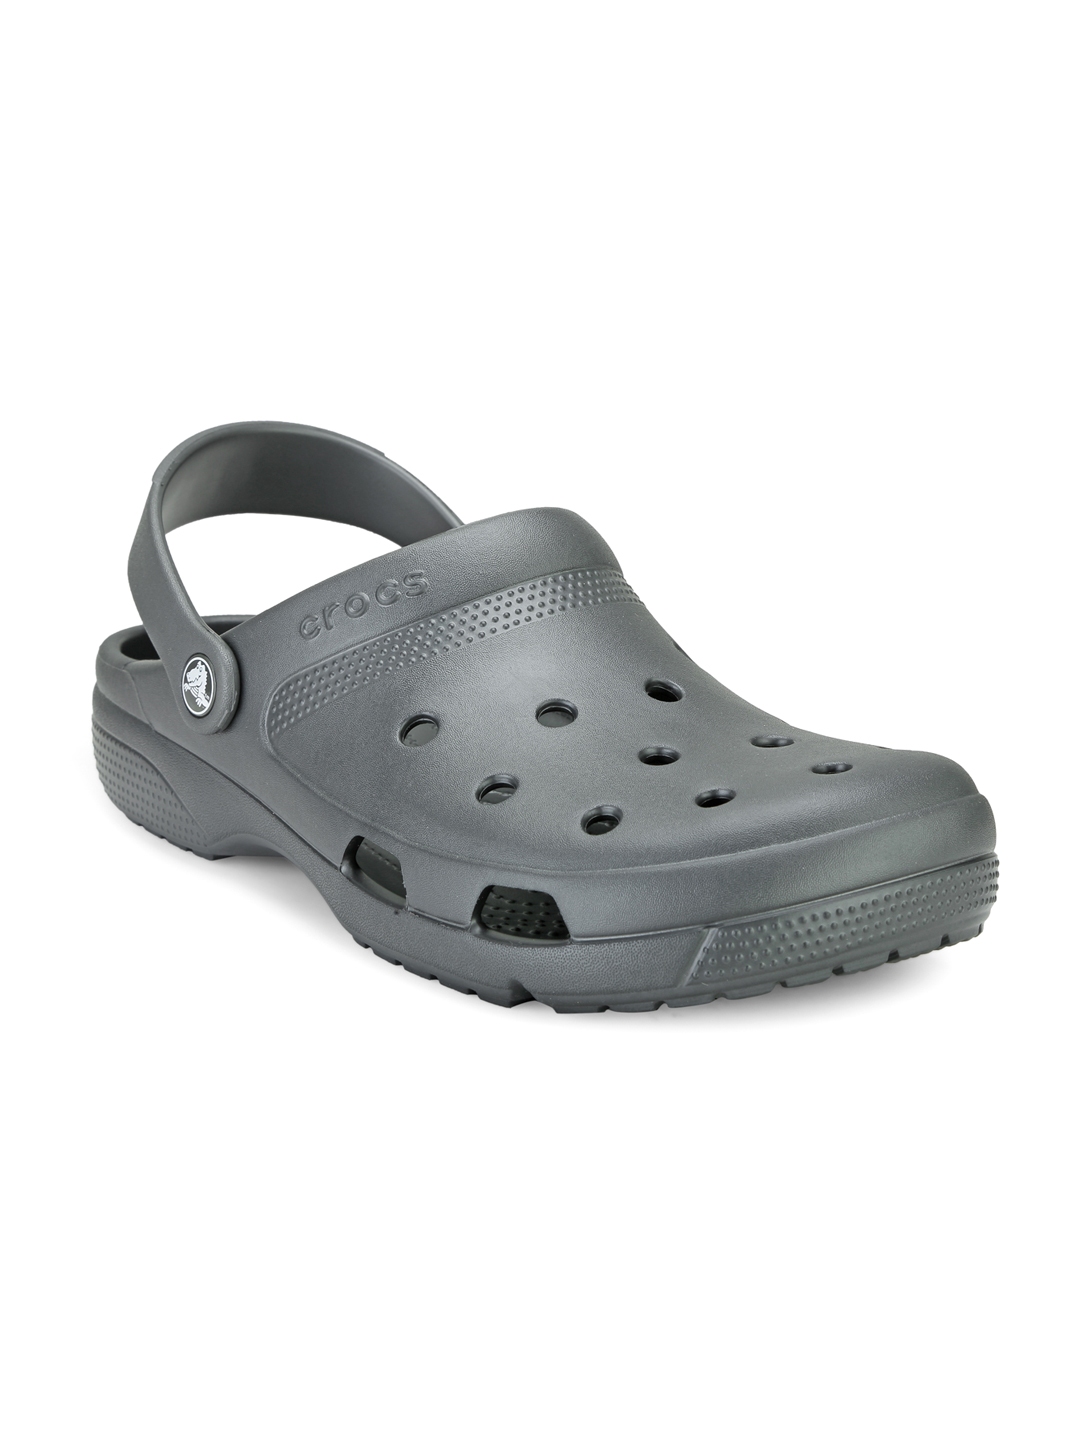 grey crocs for men